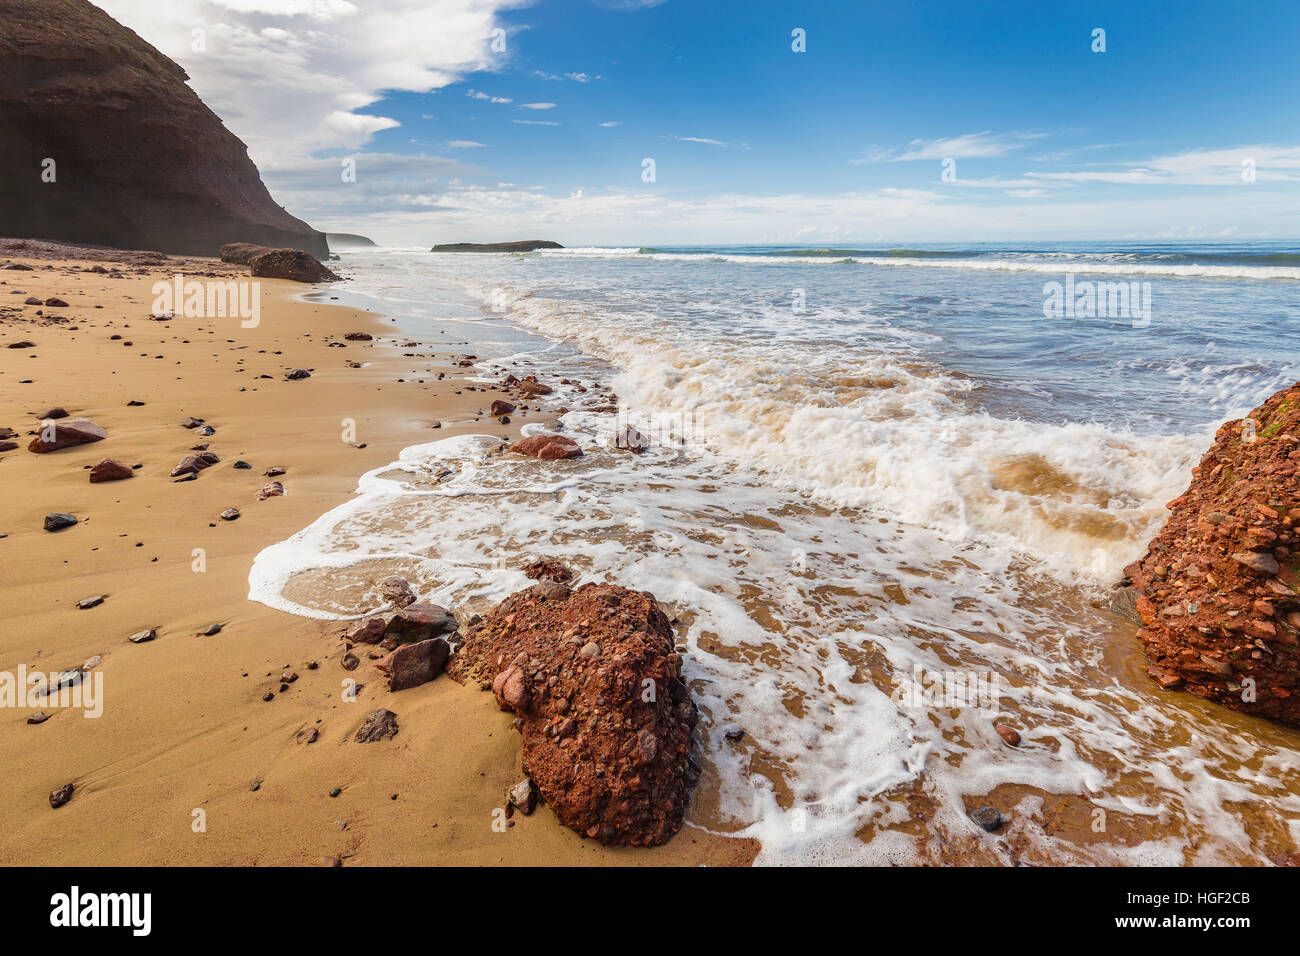 Sought Legzira beautiful beaches on the coast of Morocco Stock Photo